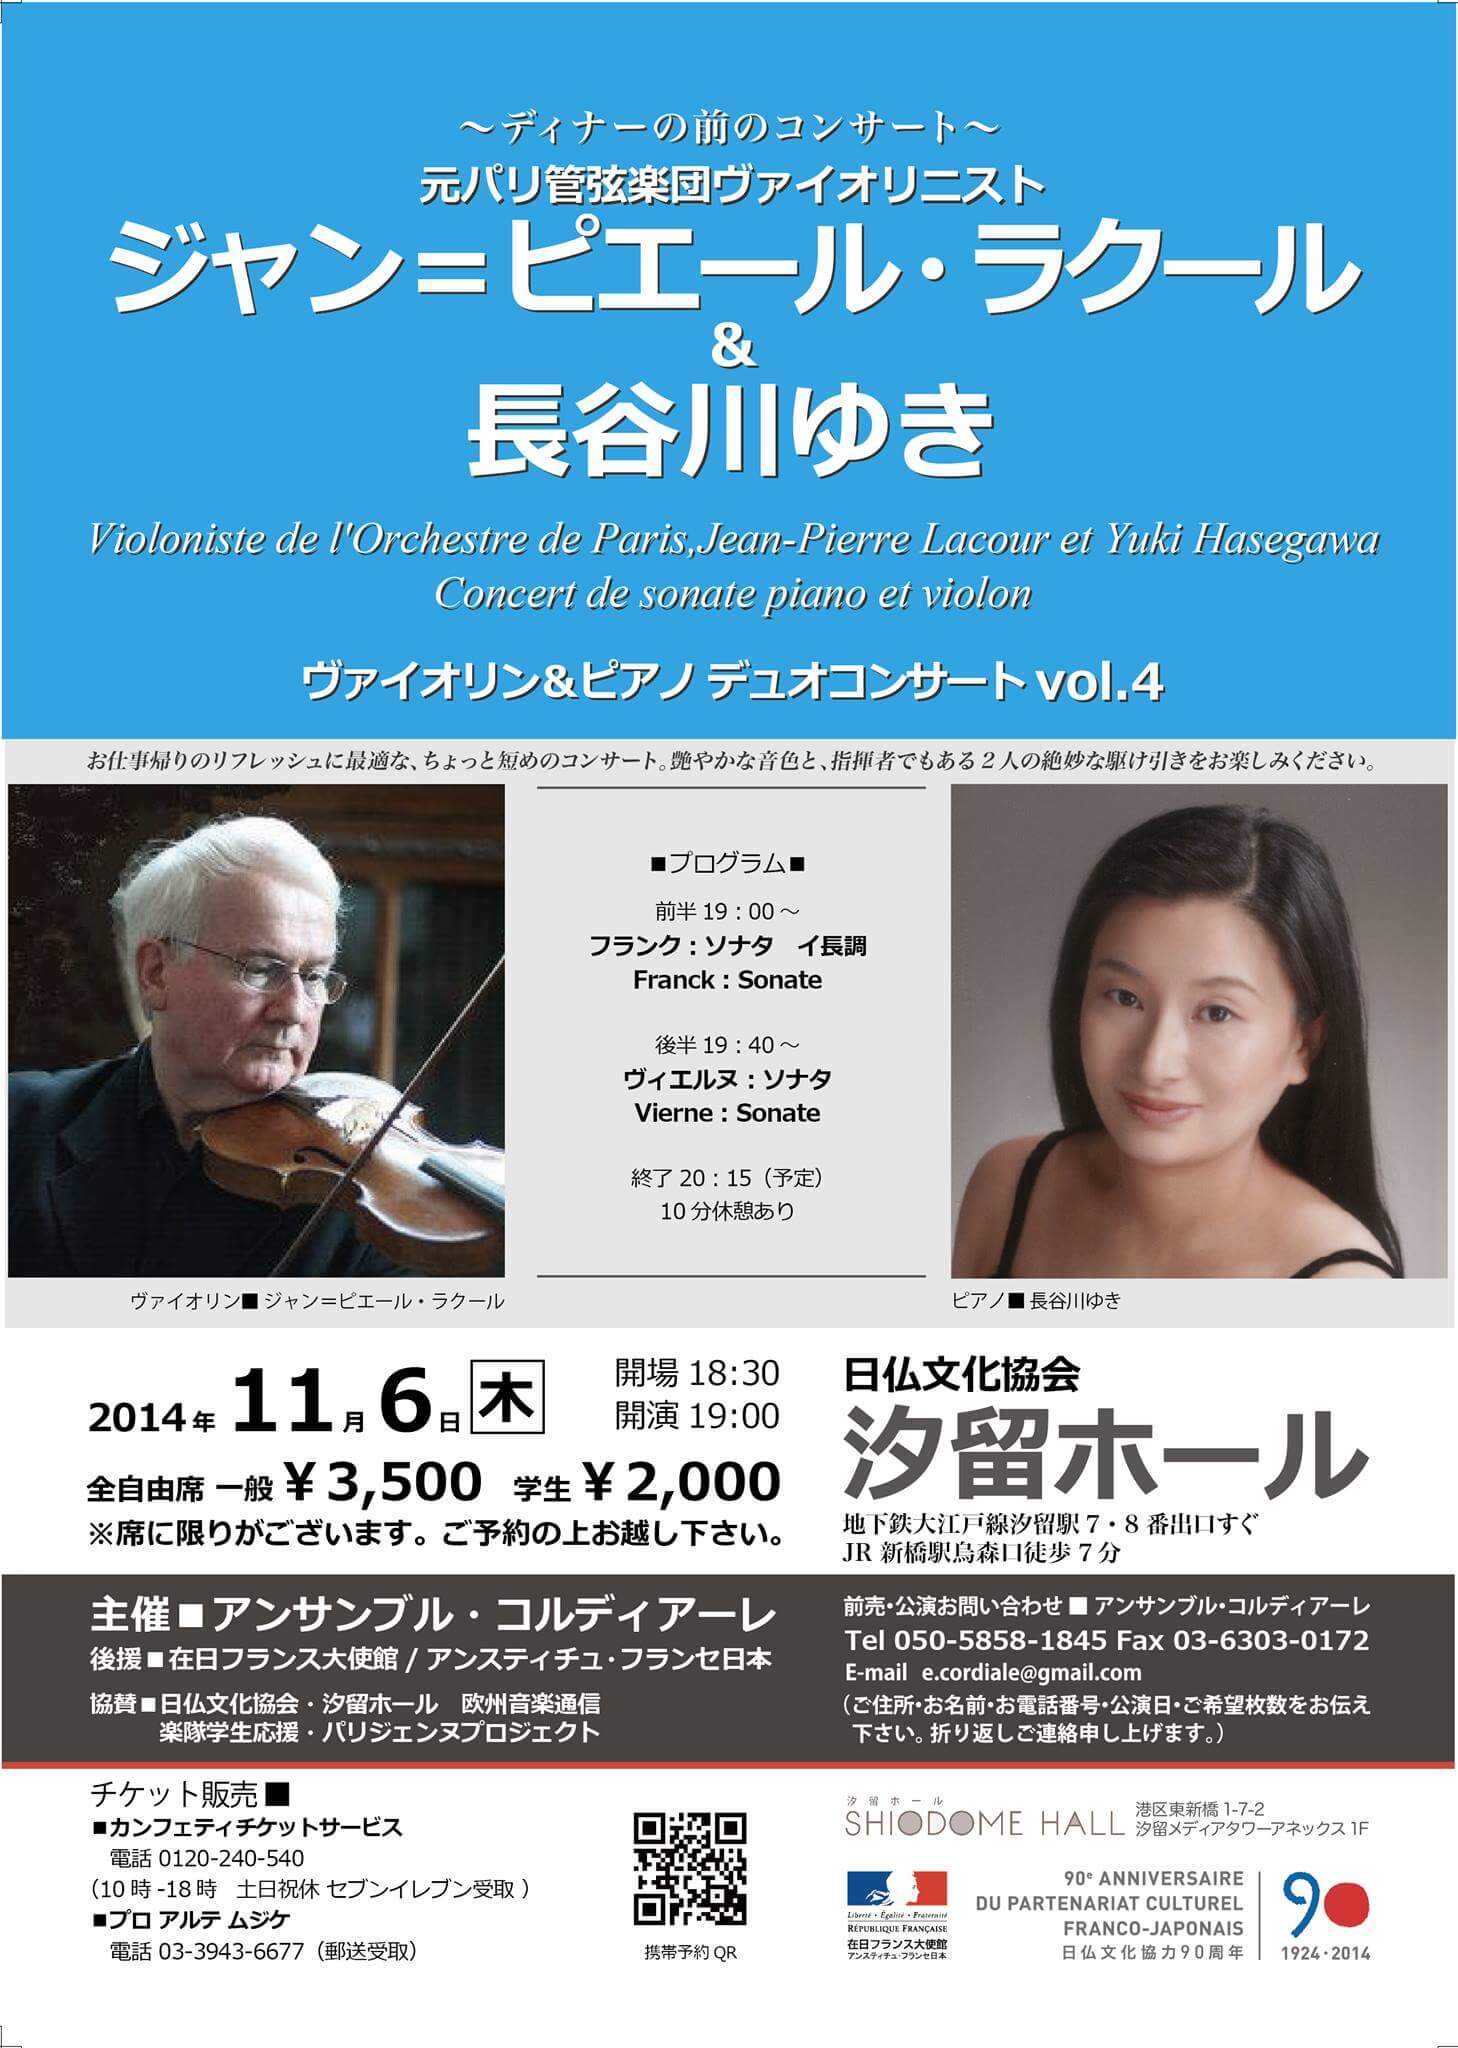 Former Paris Orchestra Violin Jean-Pierre Lacourt / Yuki Hasegawa